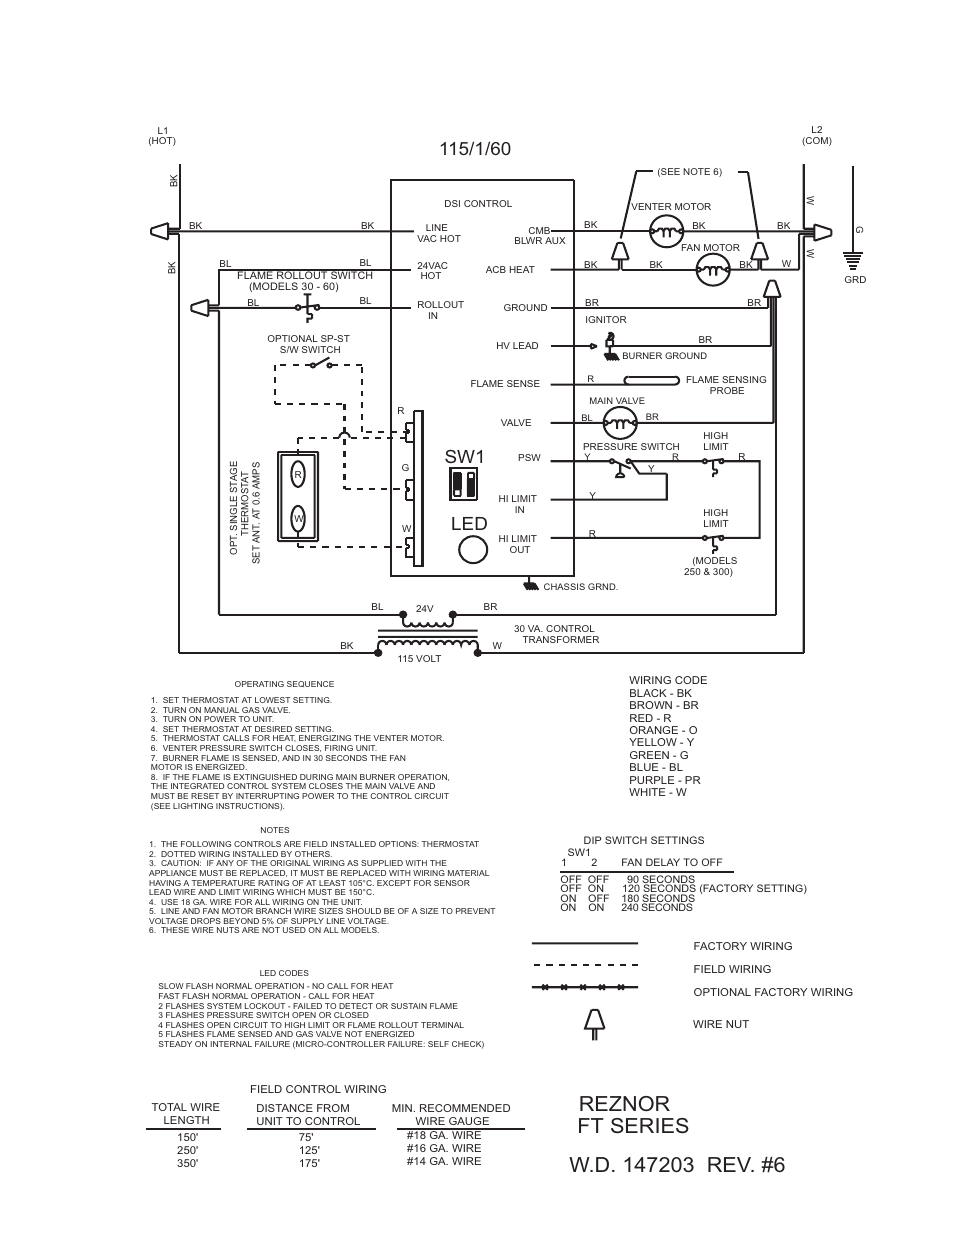 reznor wiring diagrams